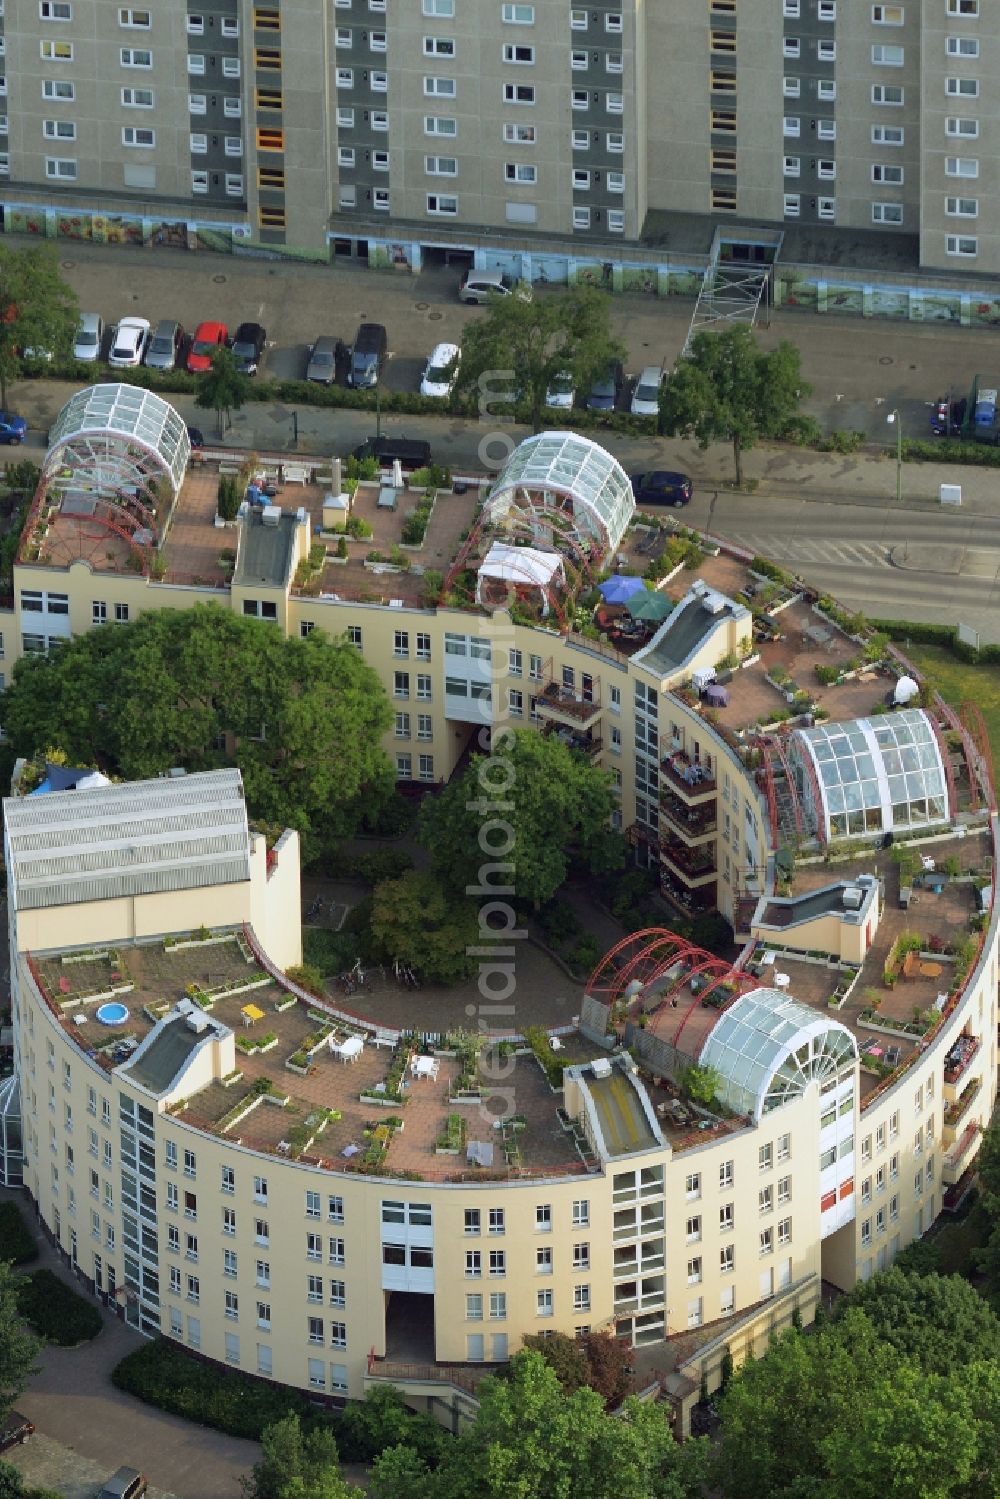 Aerial image Berlin - Roof garden landscape in the residential area of a multi-family house settlement on Ortalweg in Berlin in Germany